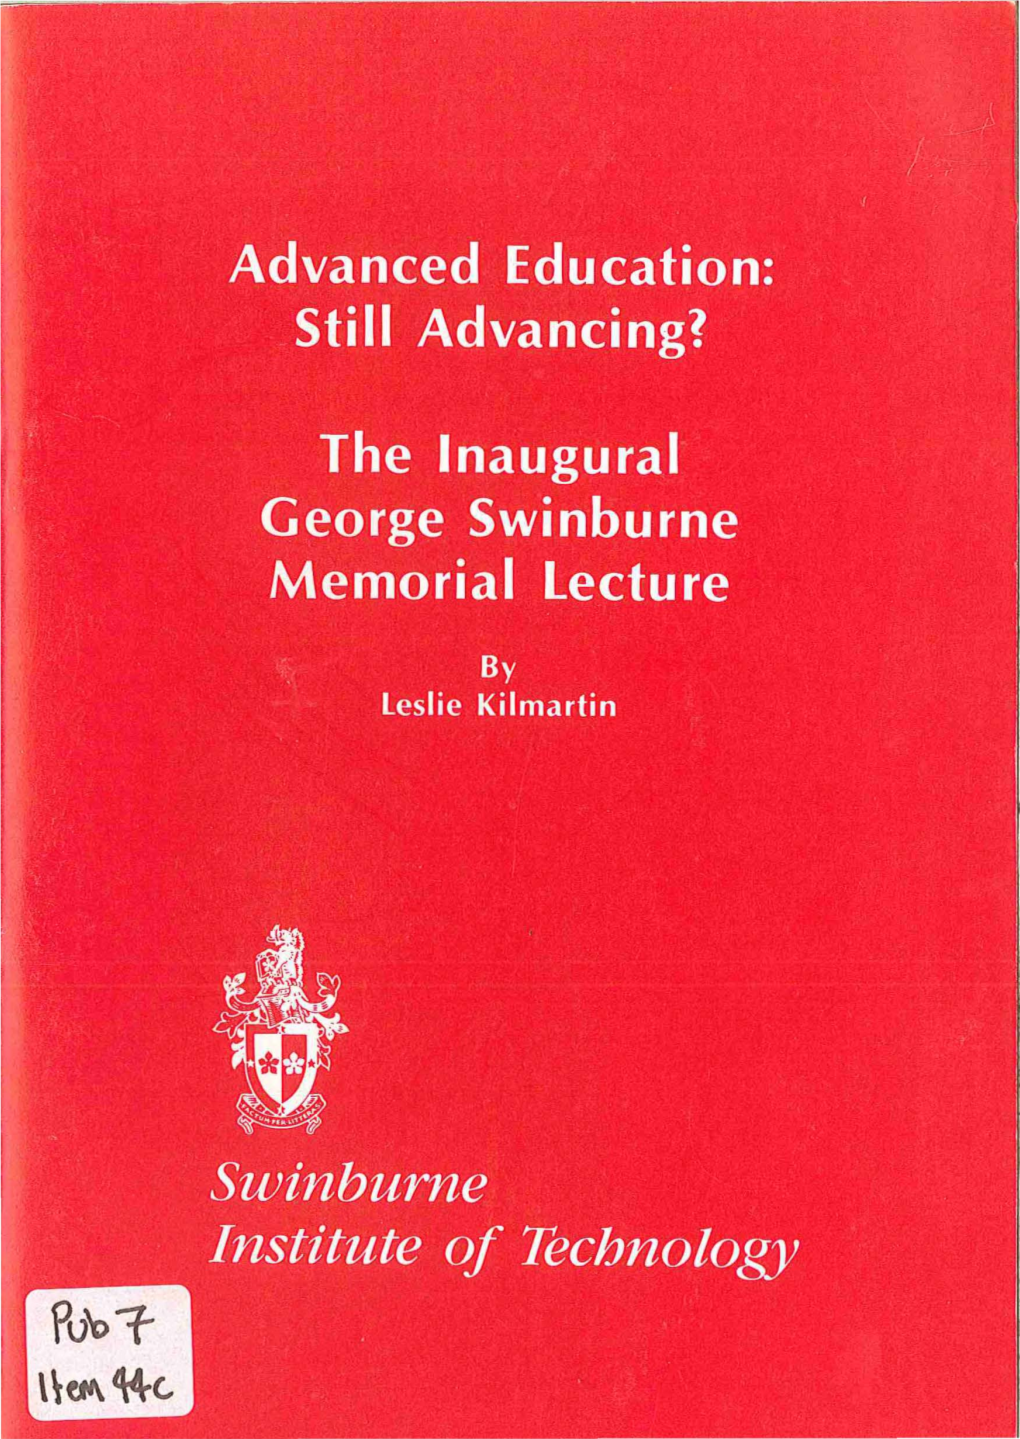 The Inaugural George Swinburne Memorial Lecture